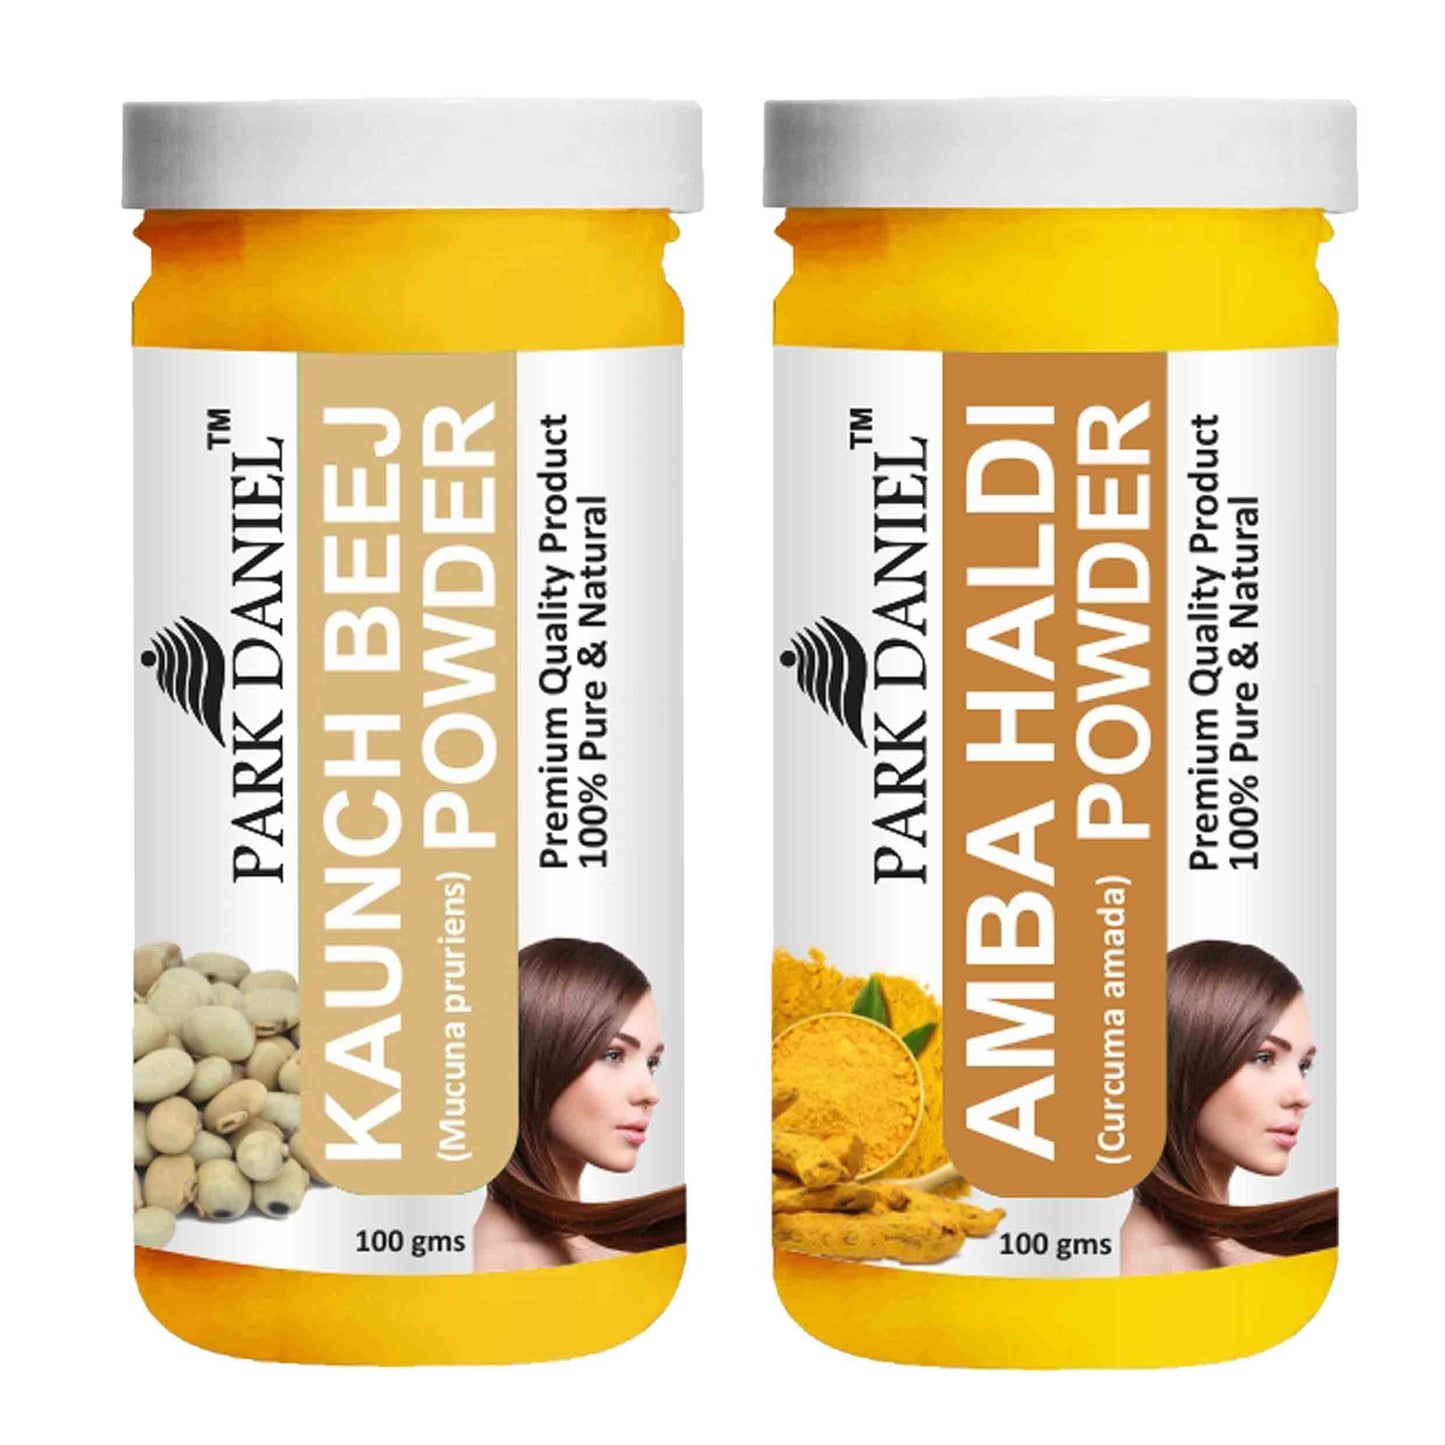 Park Daniel Kaunch Beej Powder & Amba Haldi Powder Combo pack of 2 Jars of 100 gms(200 gms)